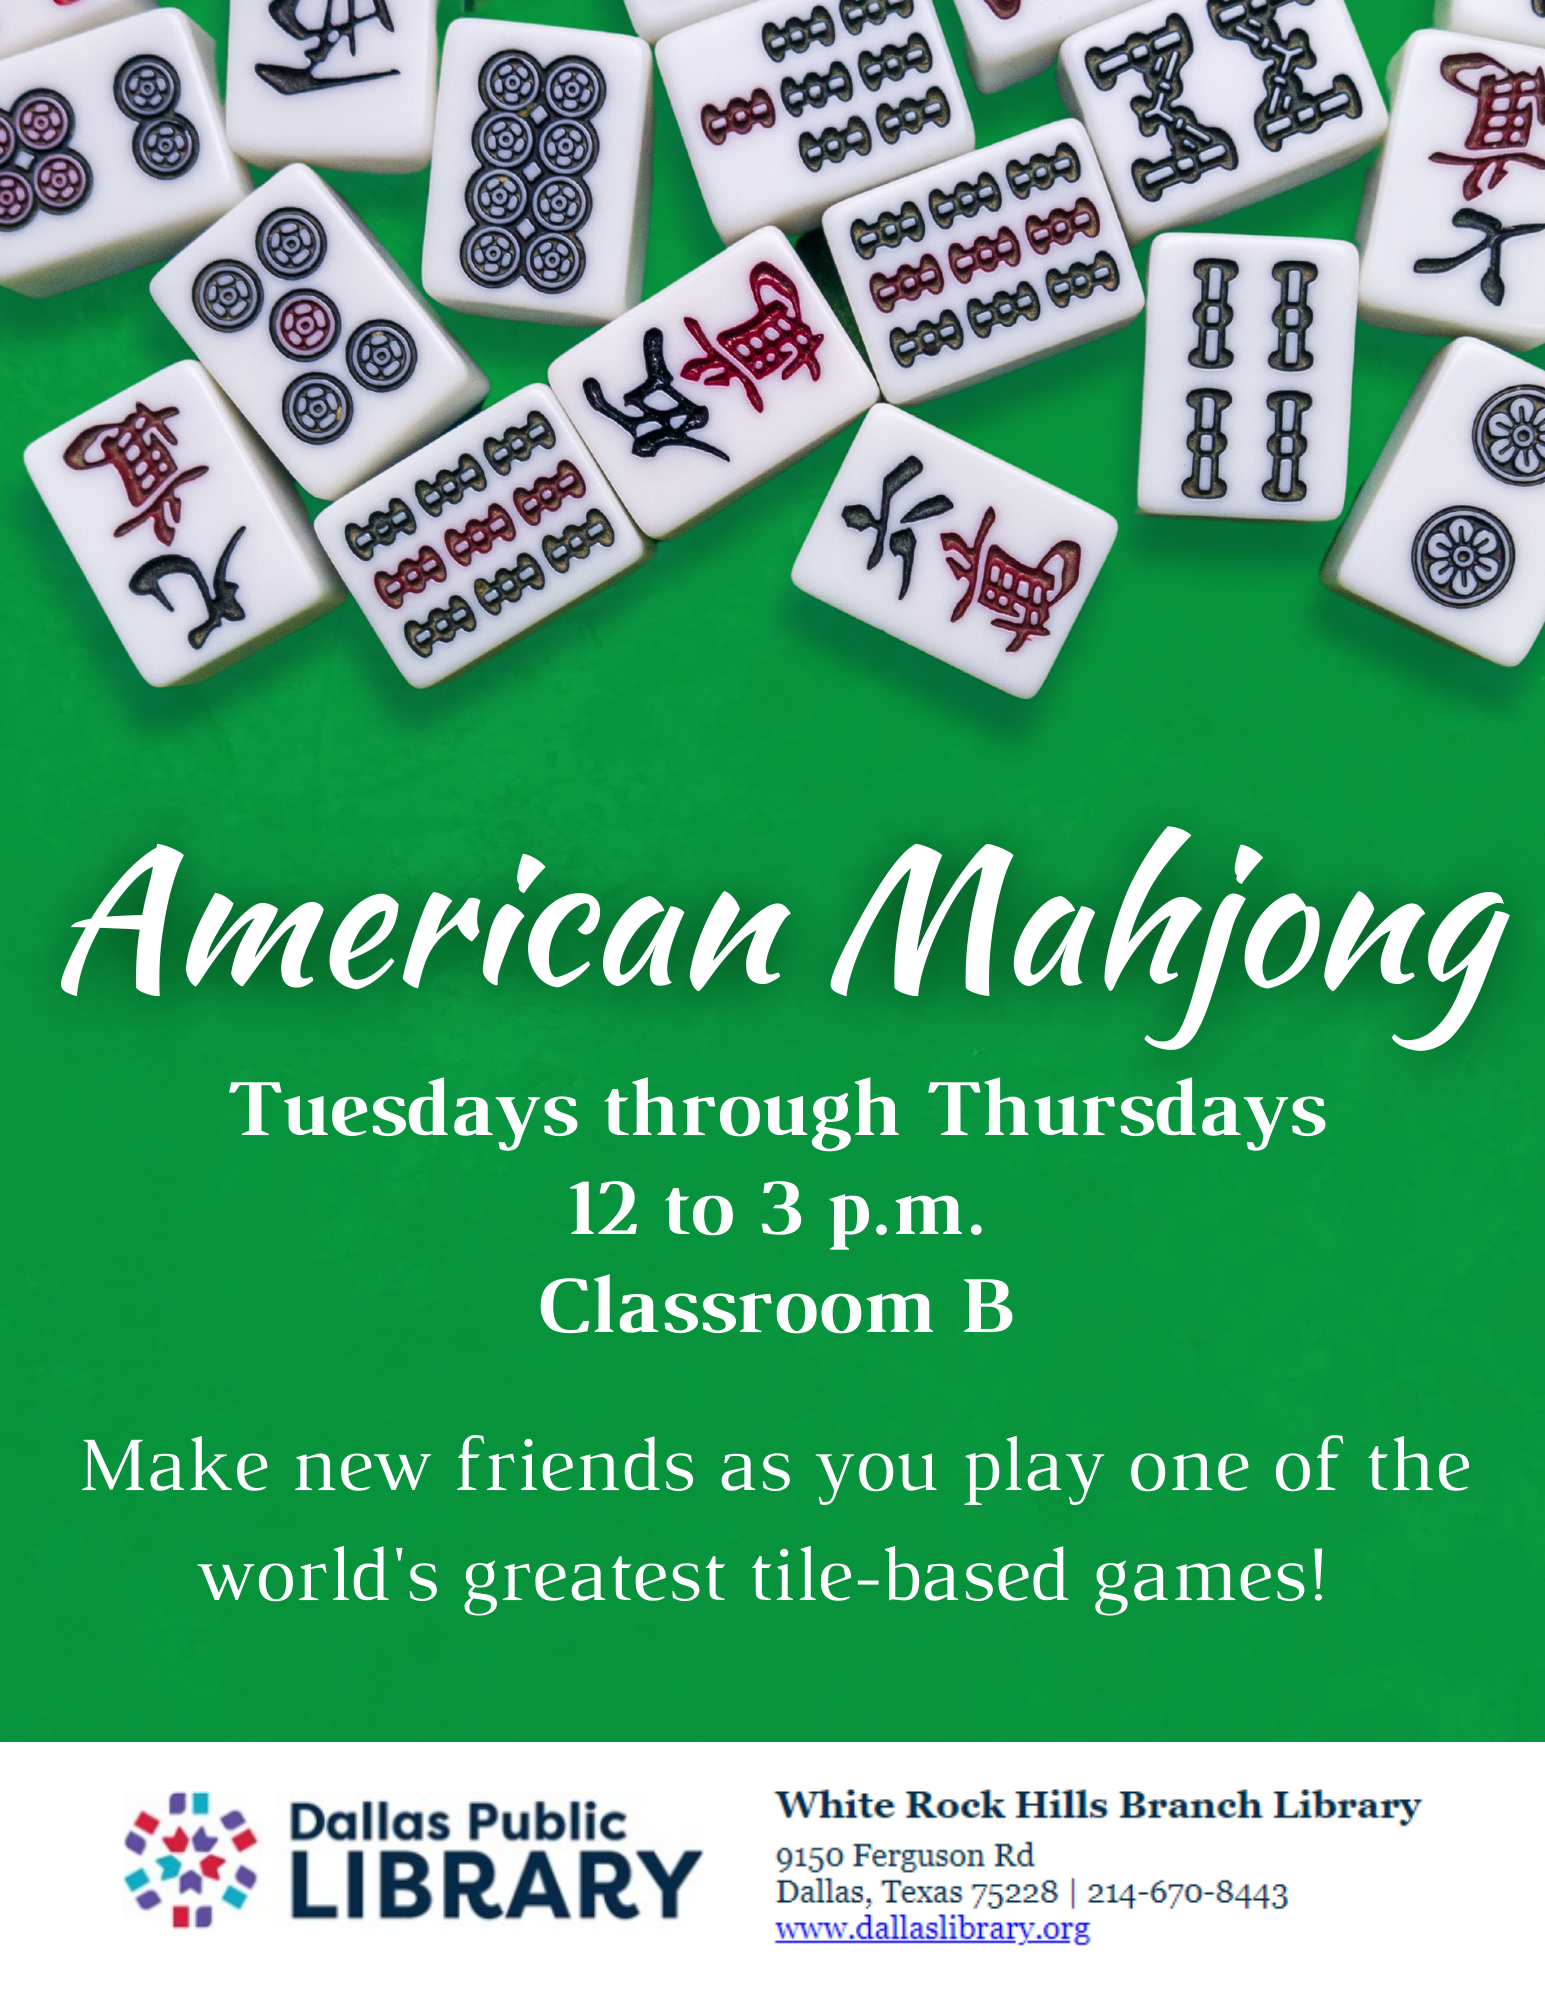 american mahjong flyer. tuesday through thursday 12pm to 3pm. classrooms